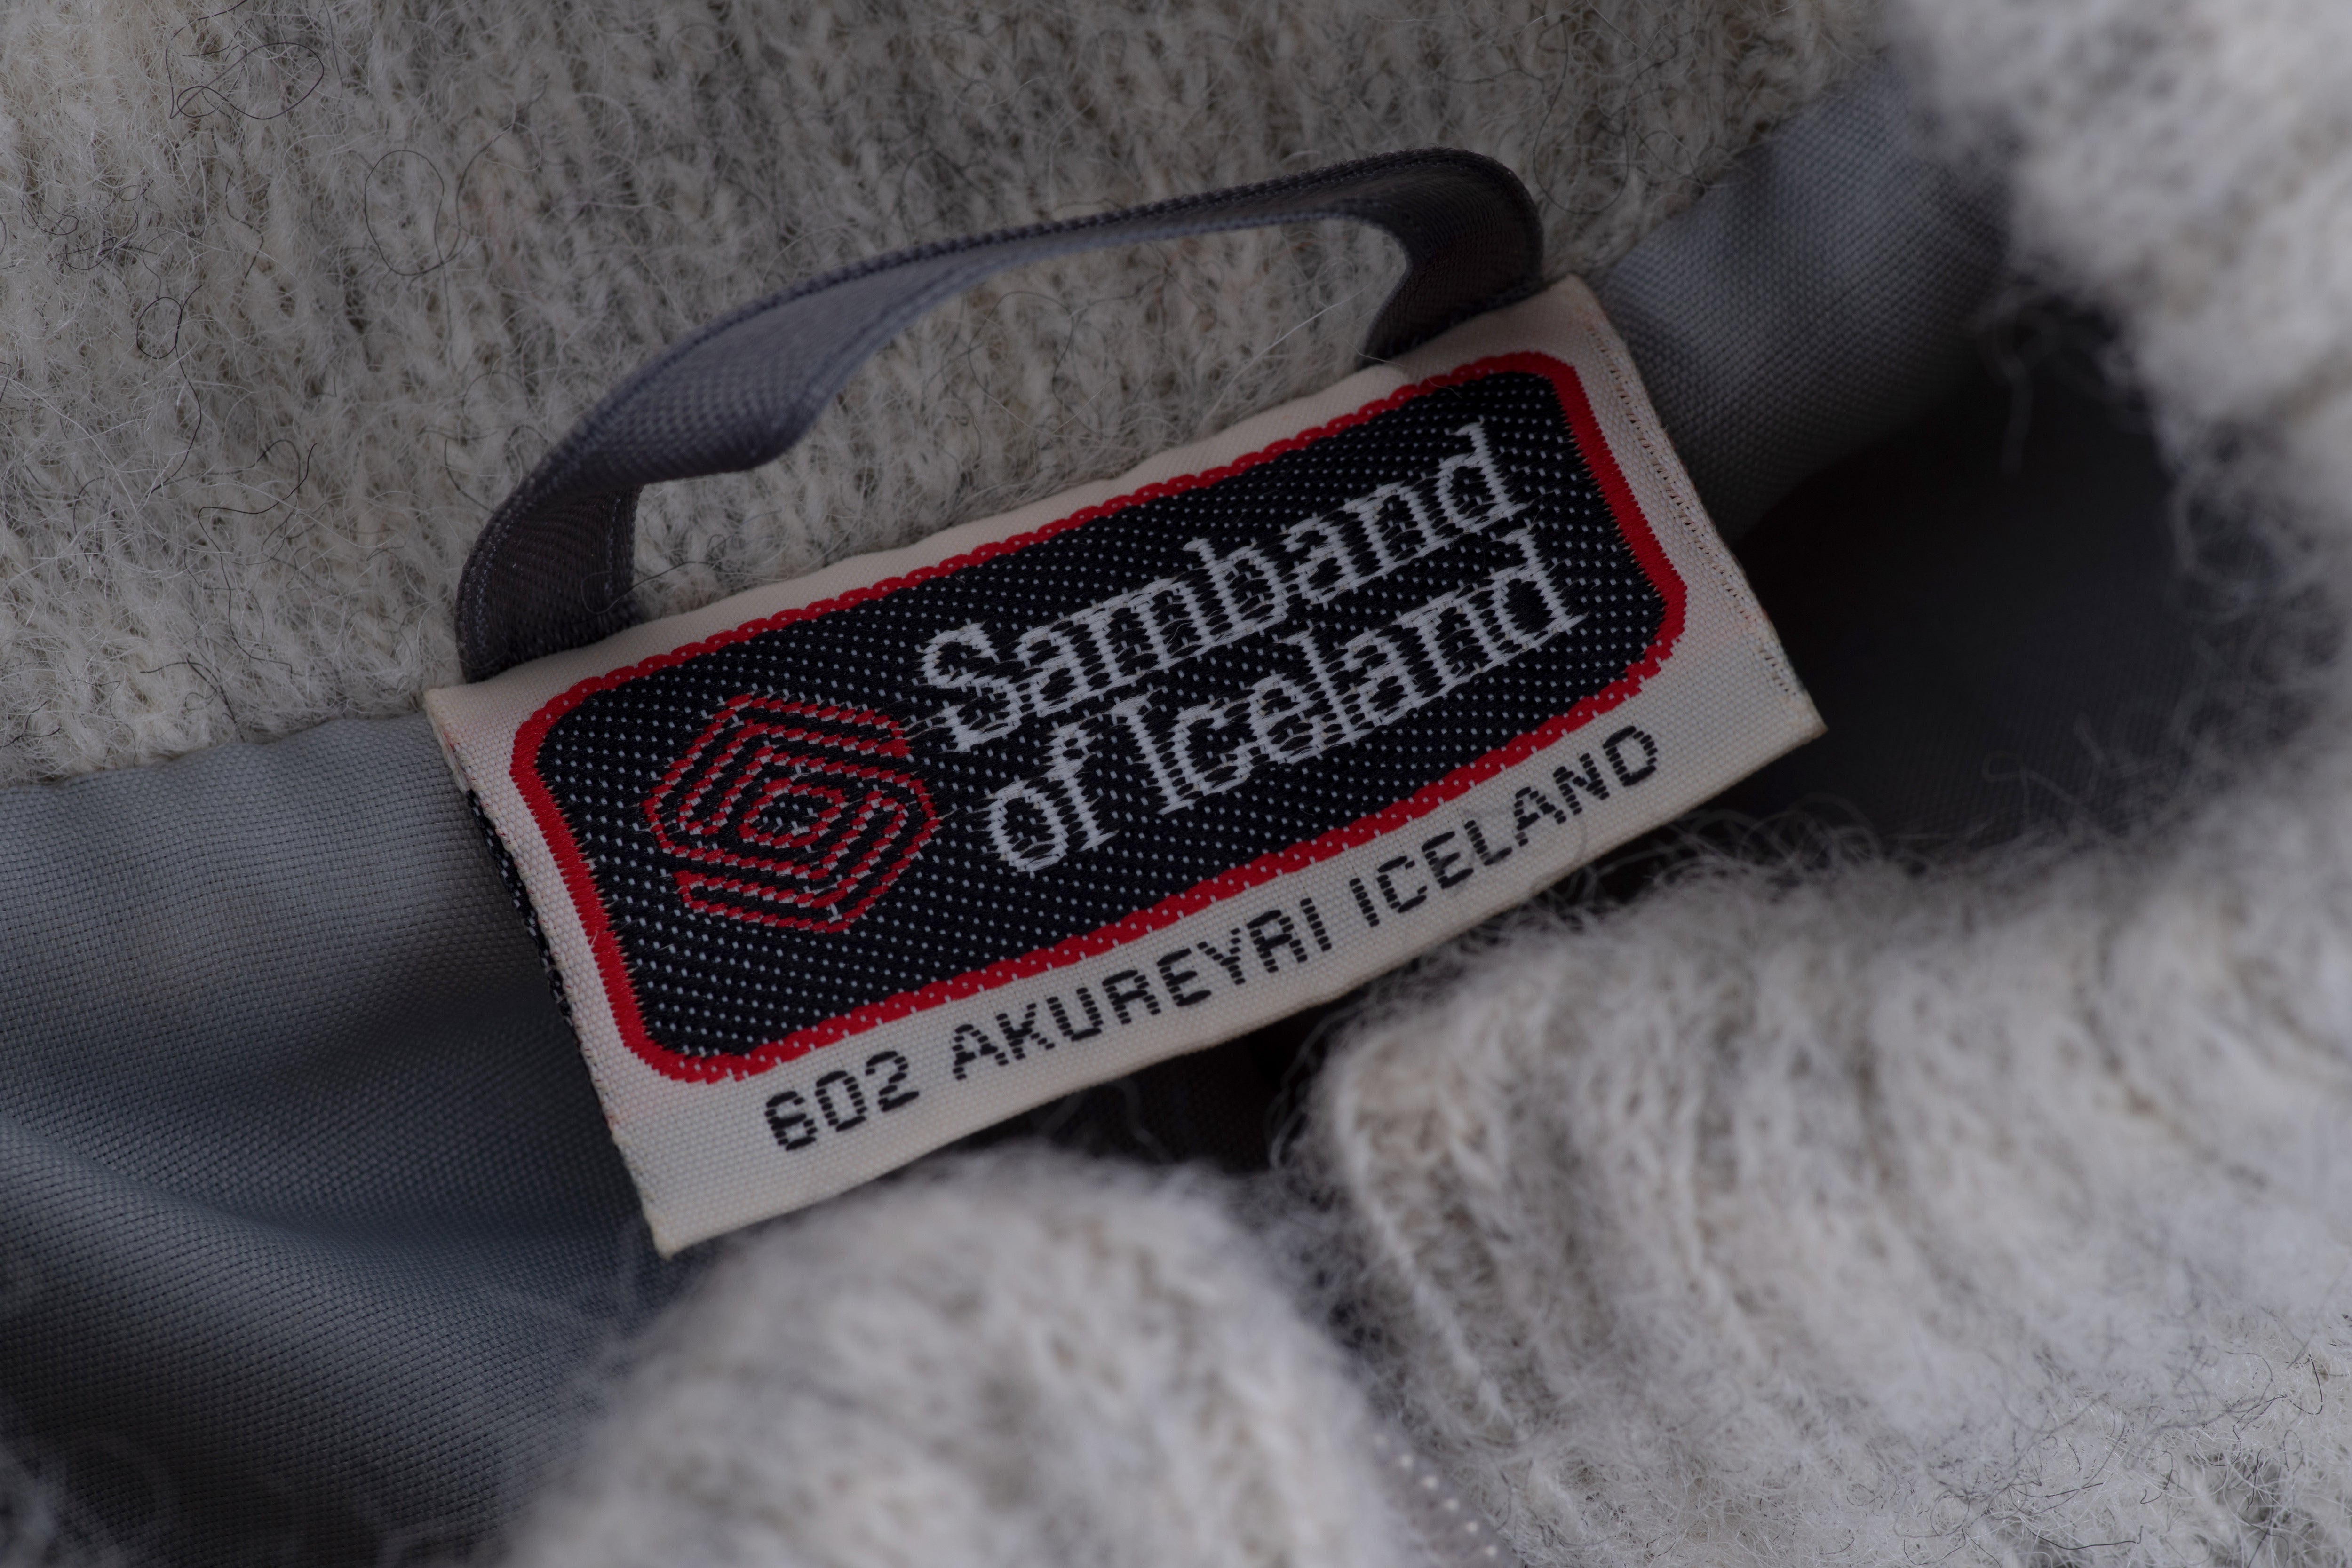 Samband Of Iceland Lightweight Wool Lined Cardigan, Women's M